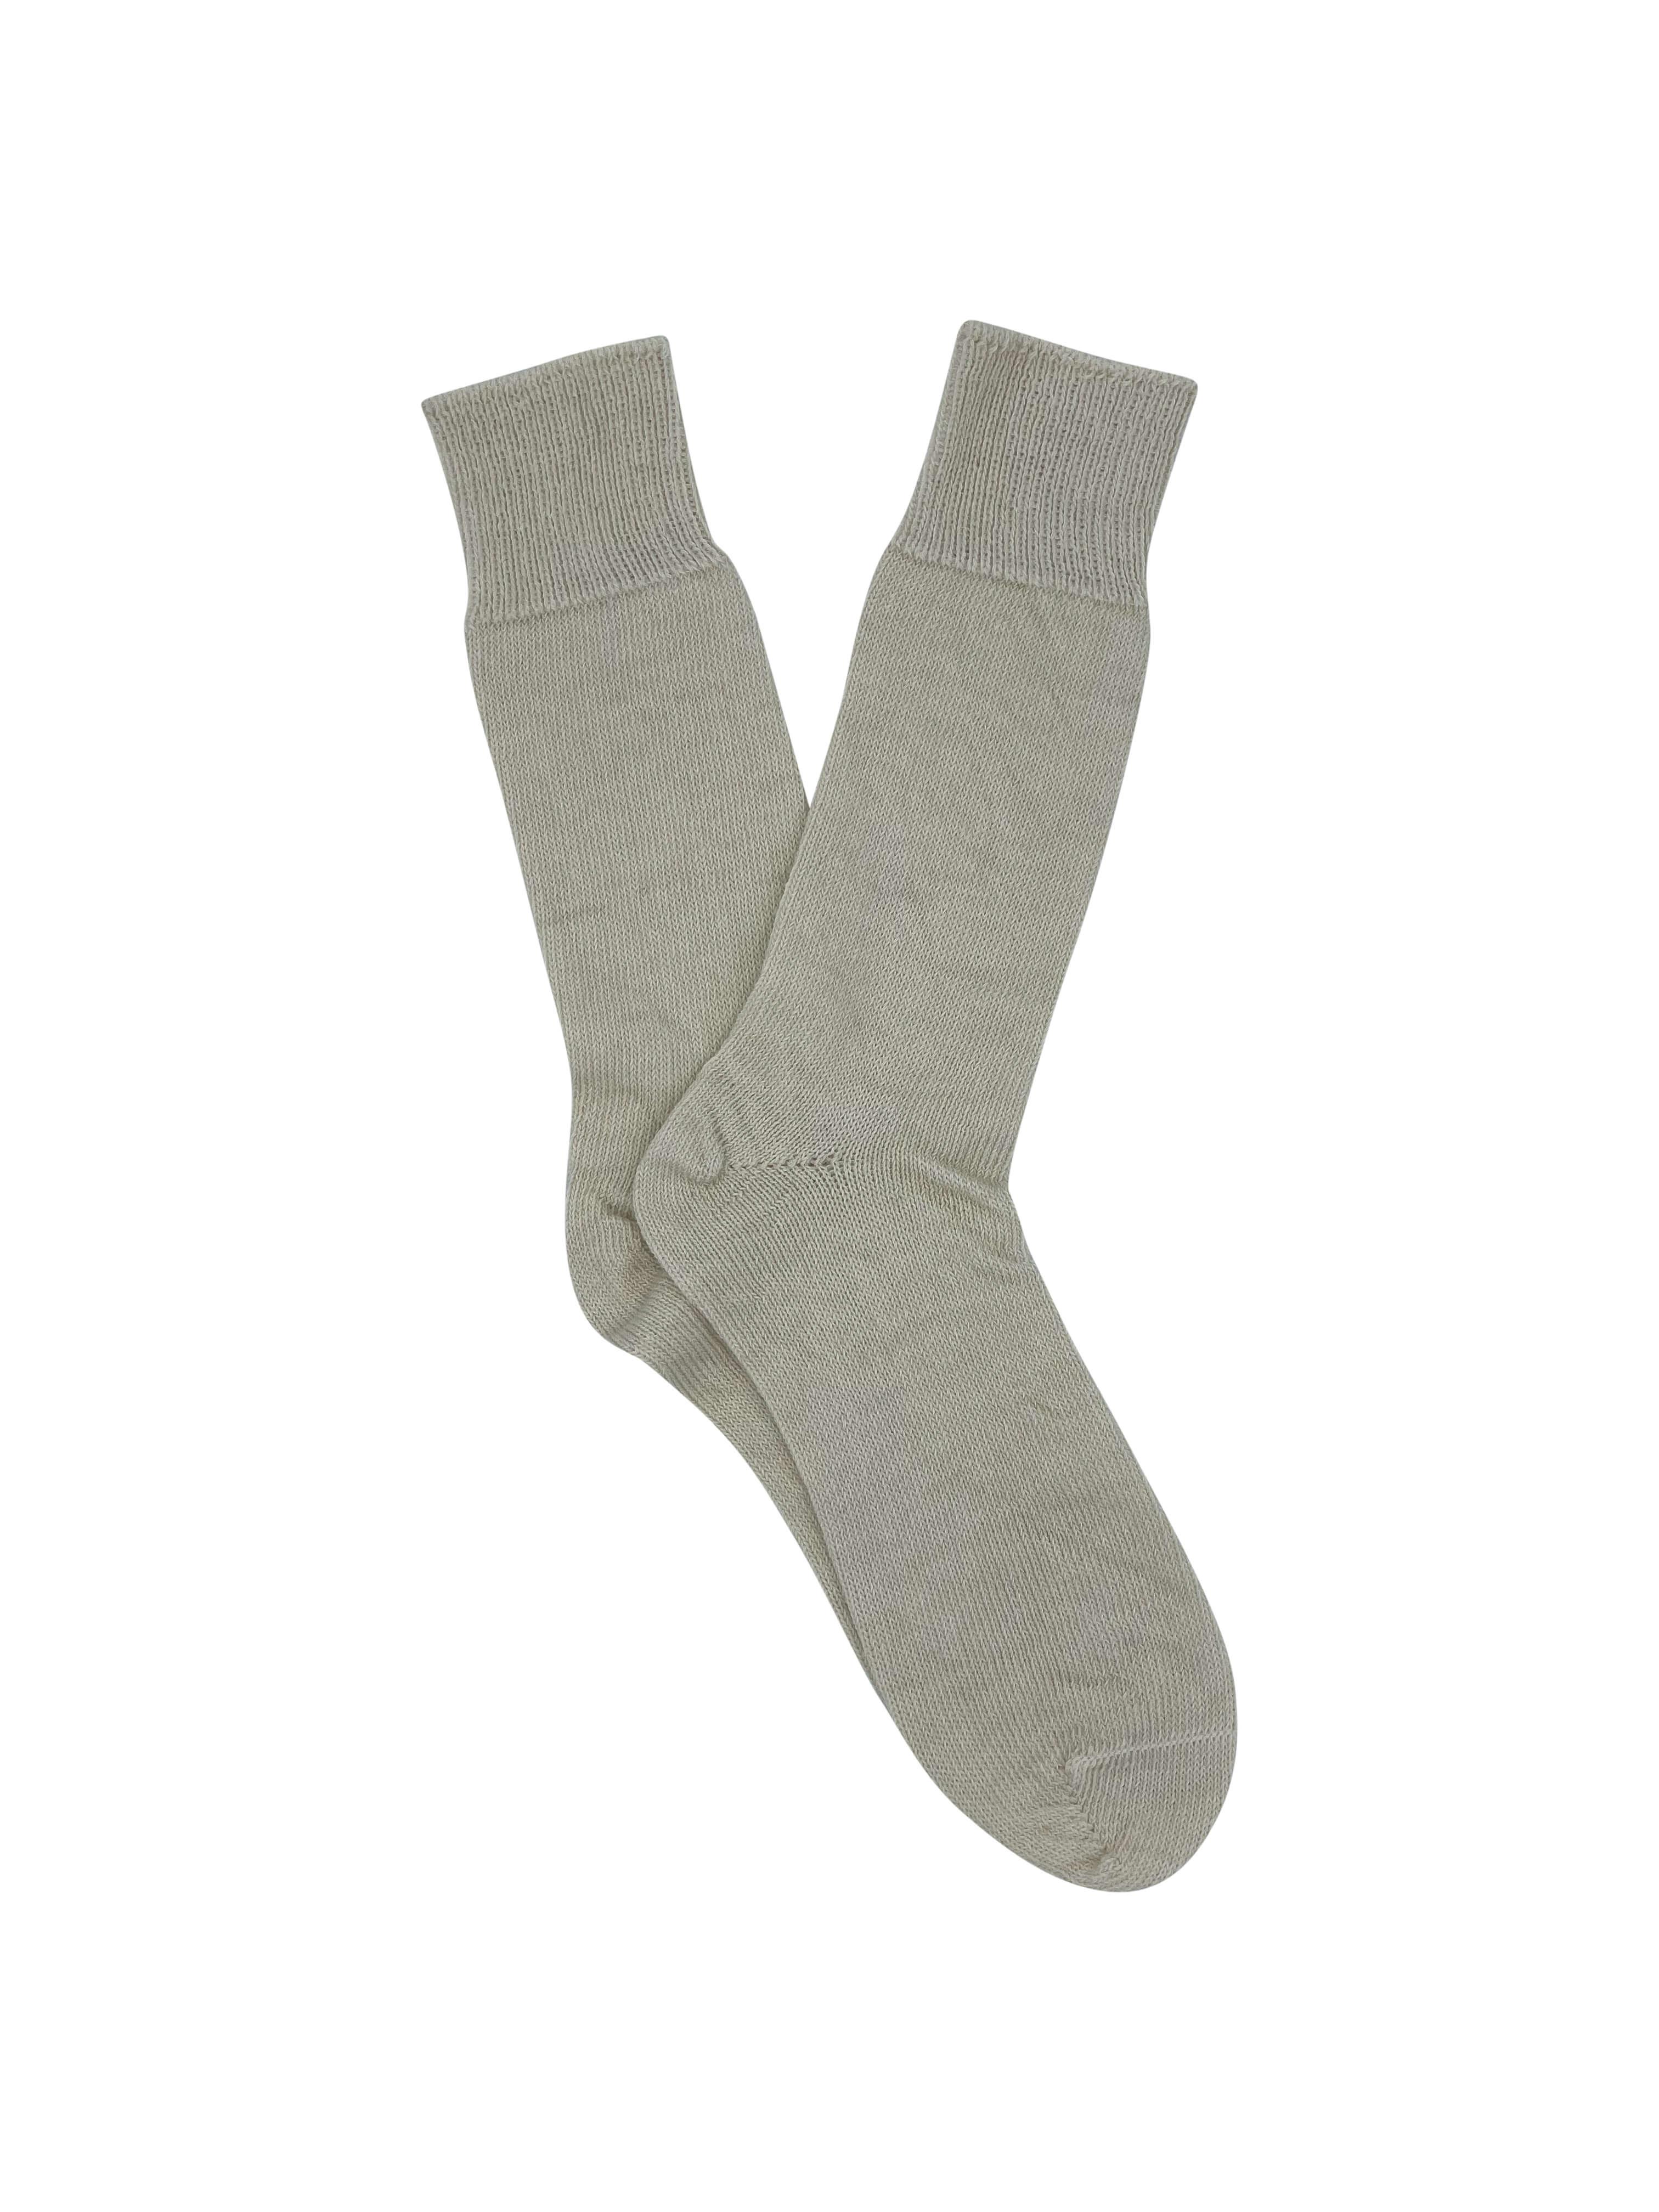 Titus Alpaca Dress Socks - Natural